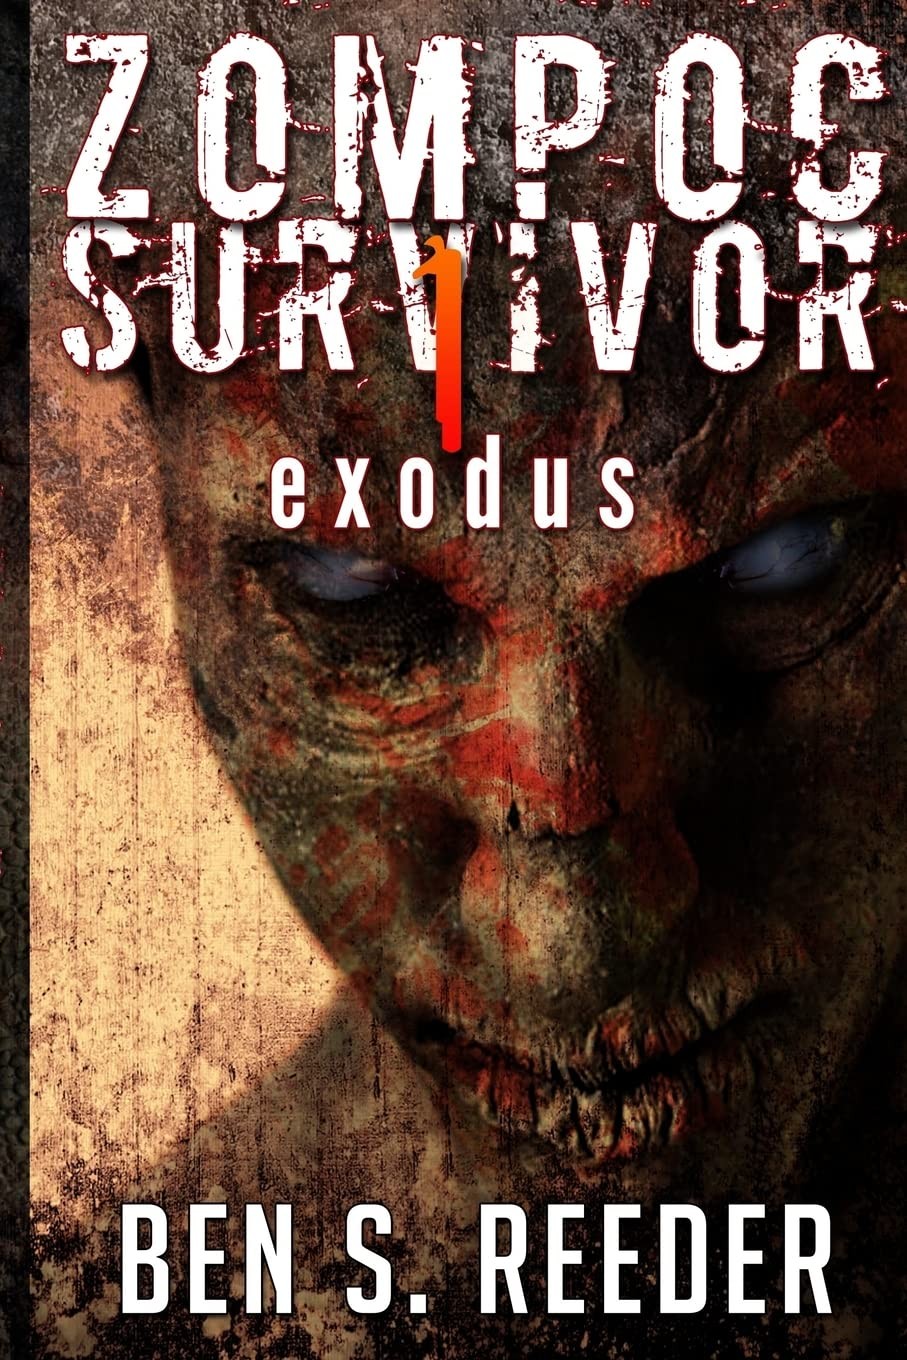 Zompoc Survivor: Exodus